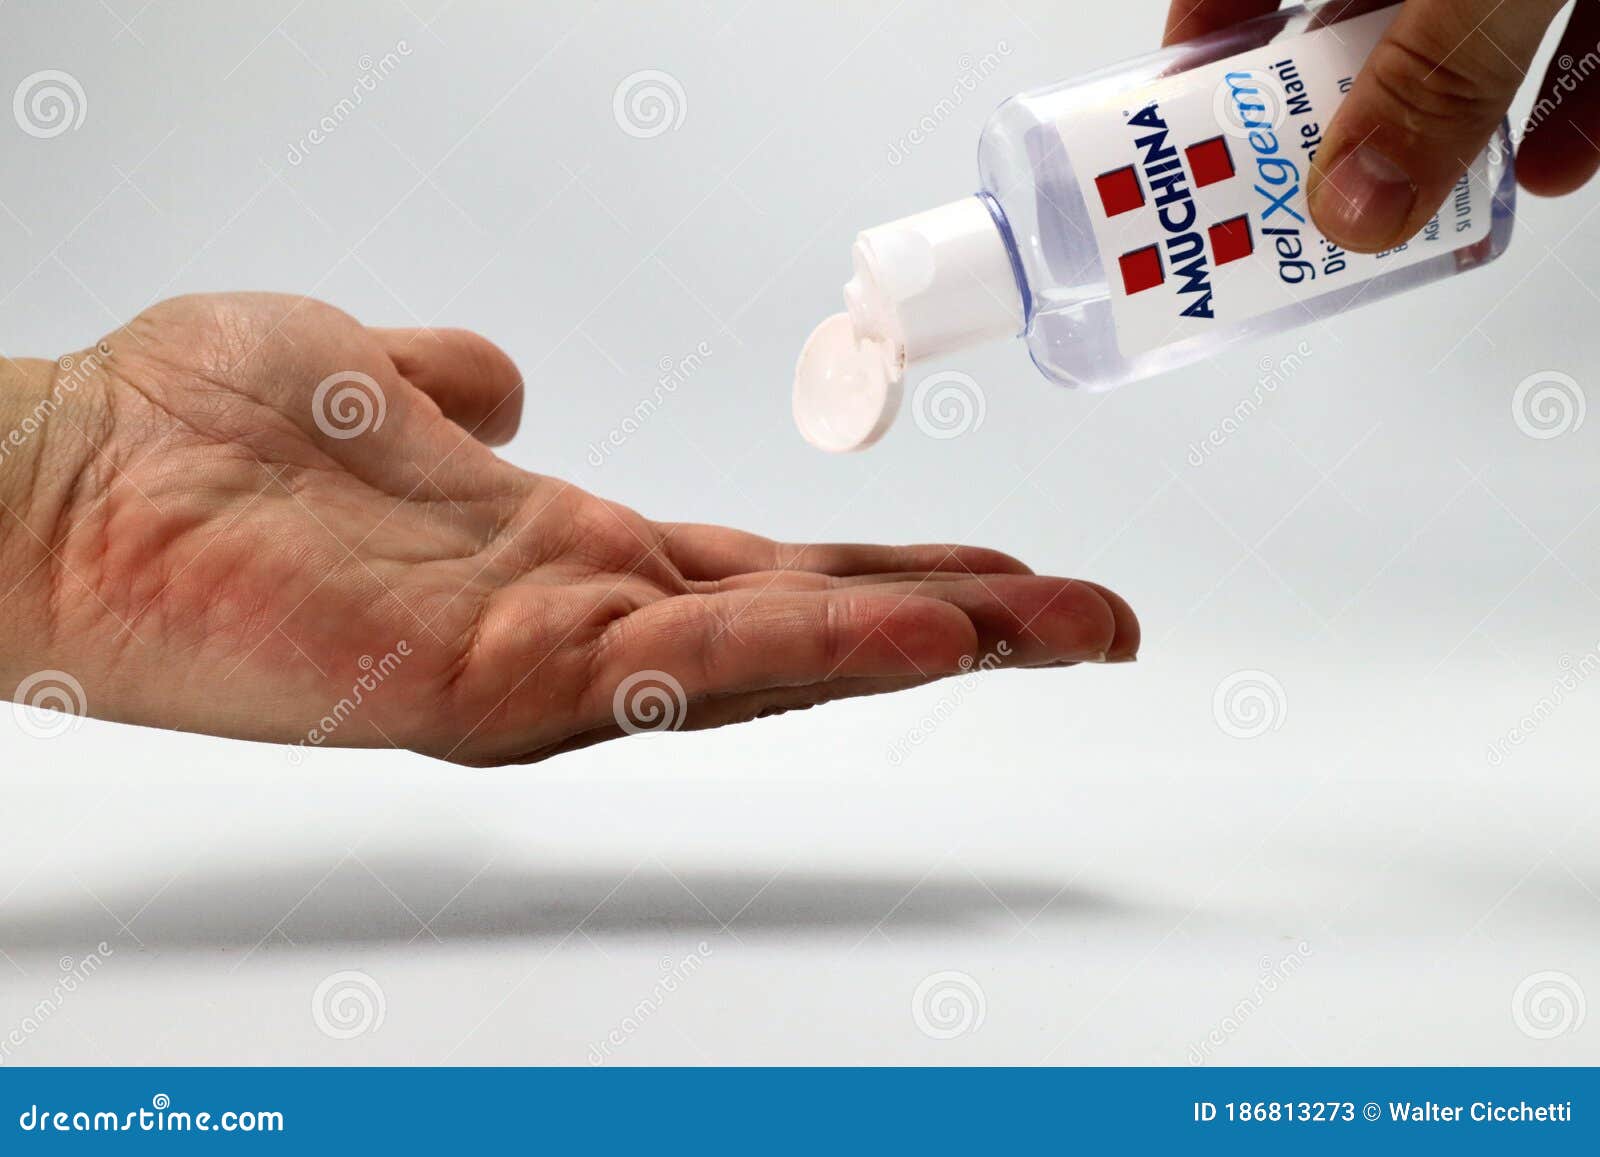 AMUCHINA Gel XGERM Hand Sanitizer Editorial Stock Photo - Image of  detergent, logo: 186813273